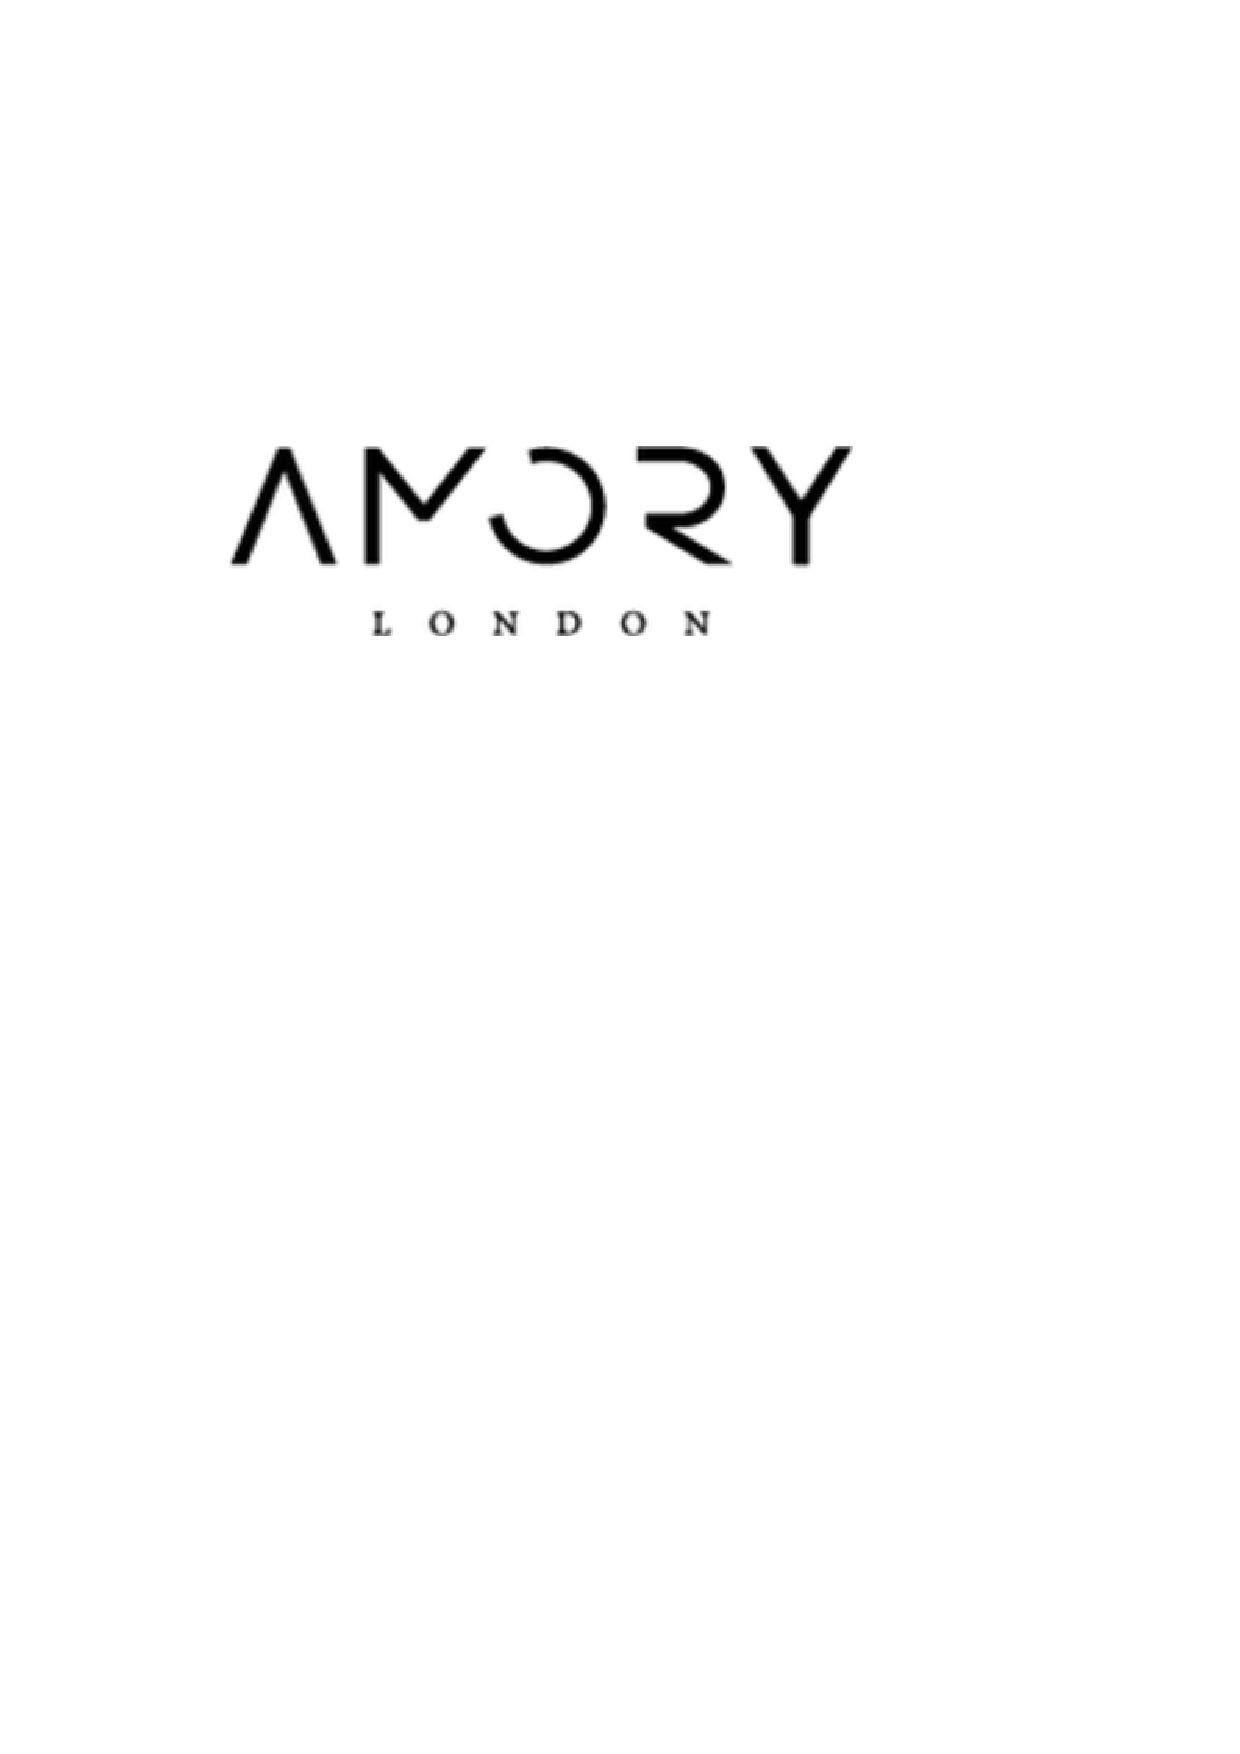 Amory